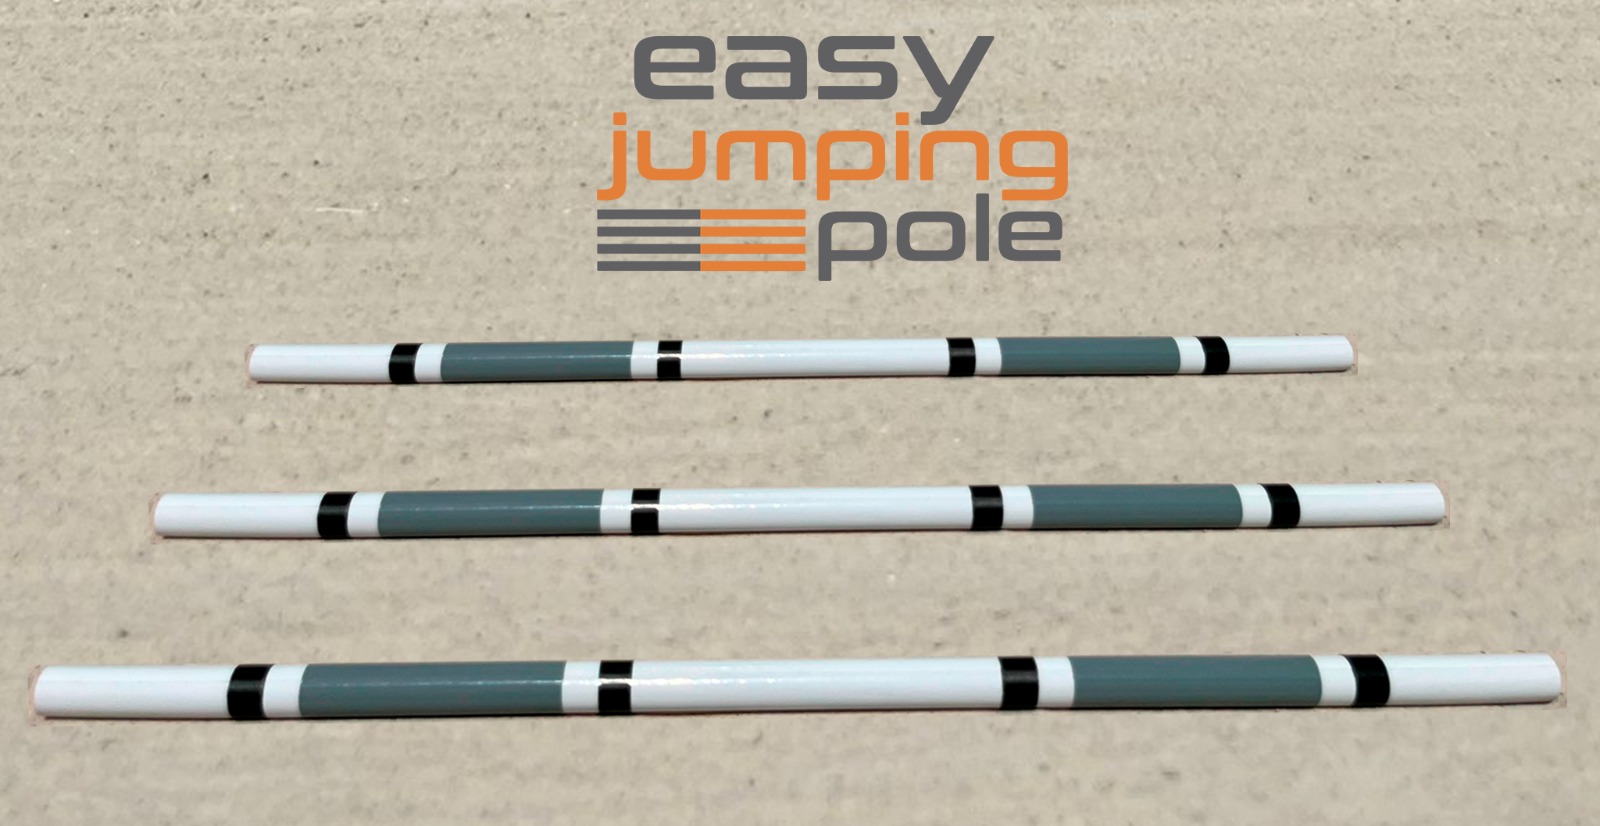 Easy jumping pole Model B-9